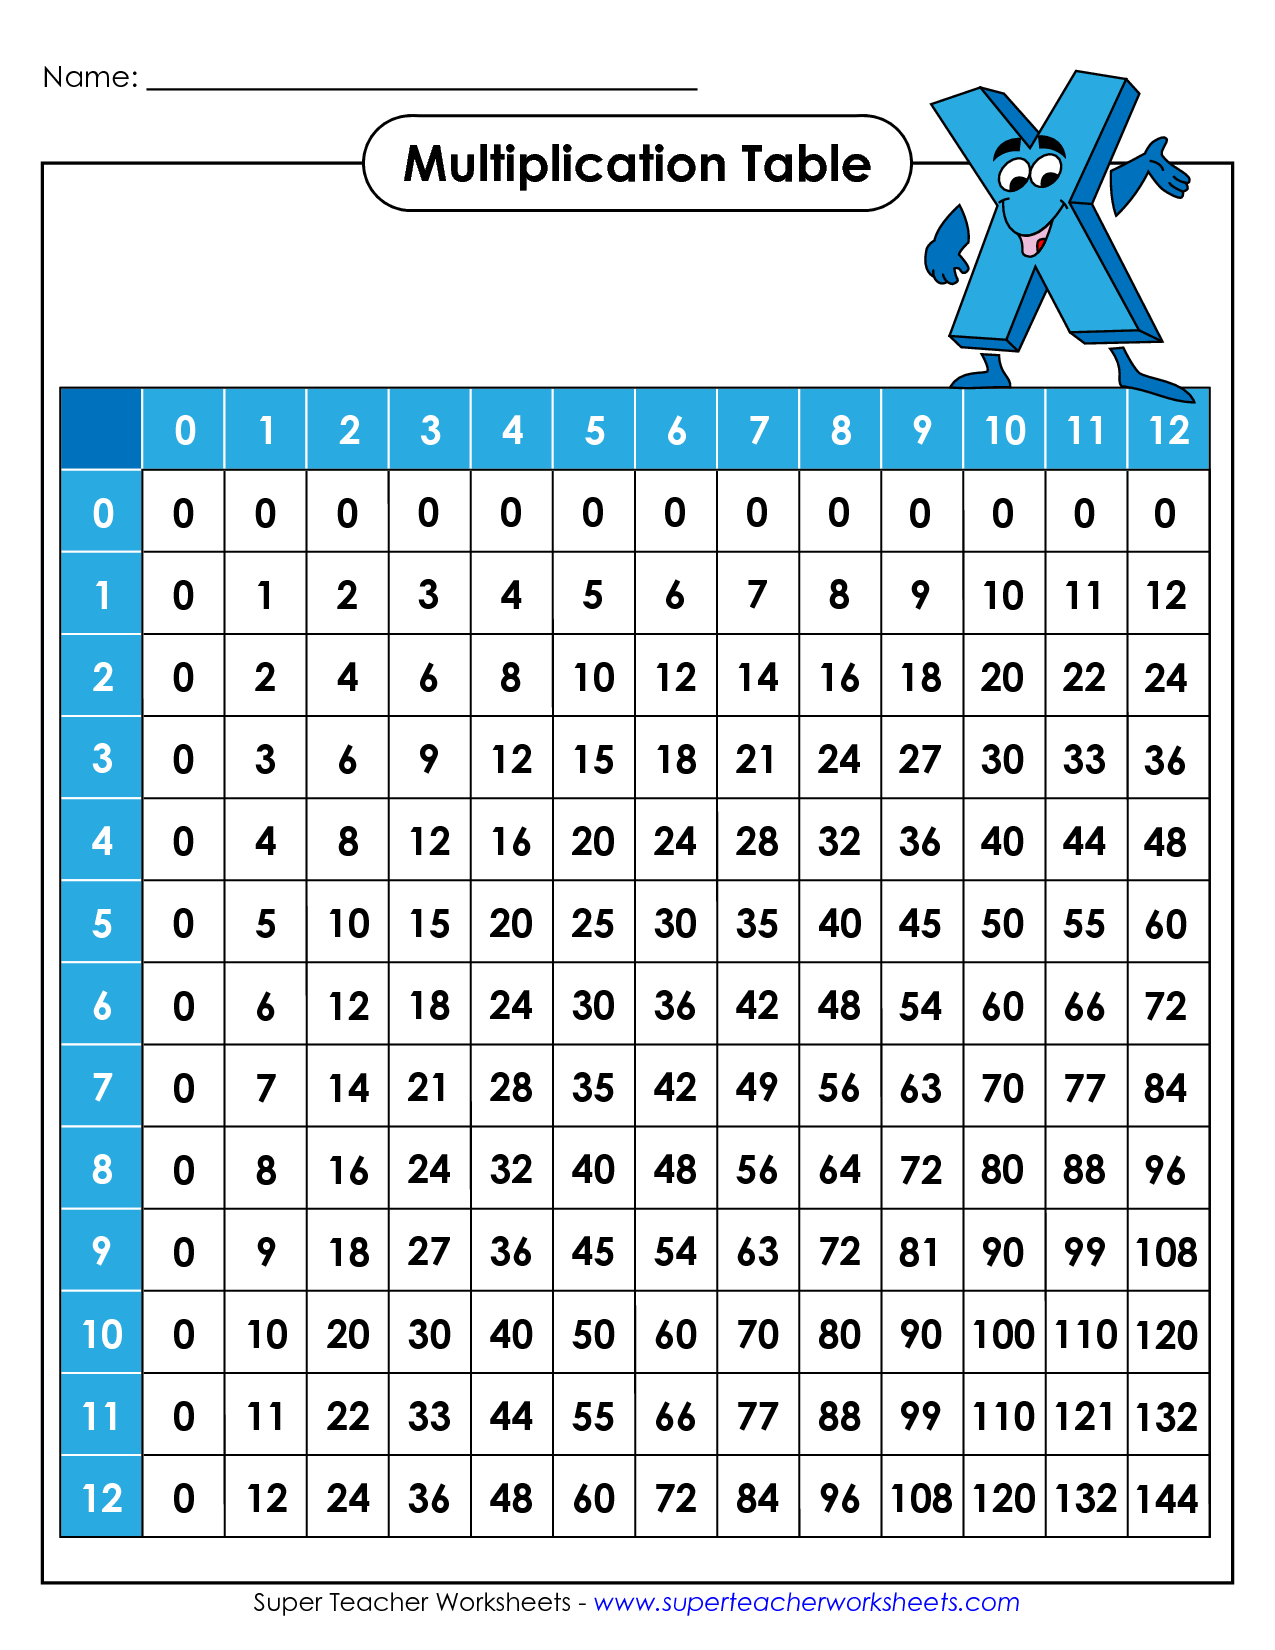 Printable Multiplication Facts 0-12 | PrintableMultiplication.com